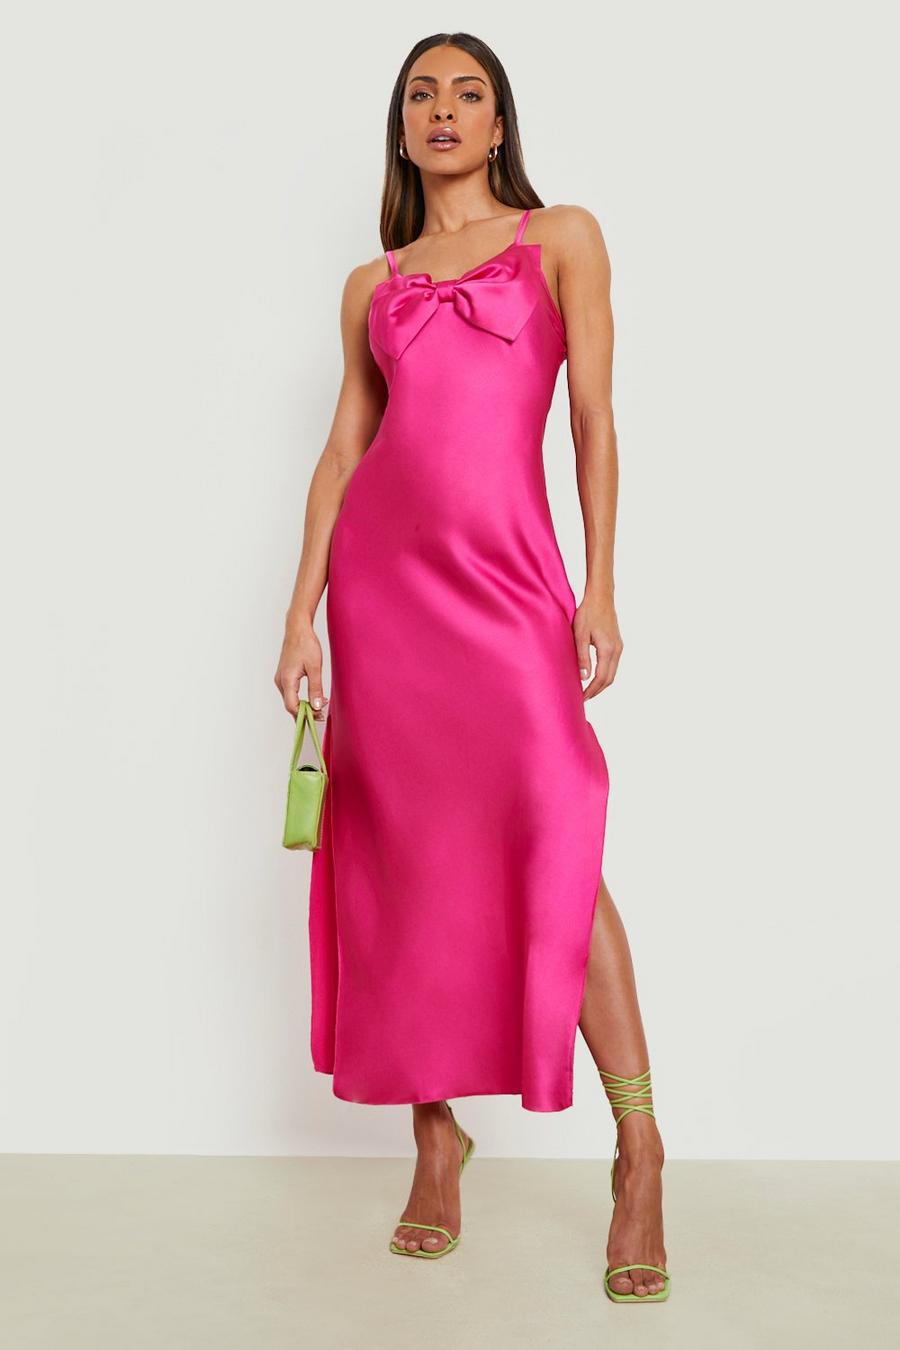 Hot pink Satin Strappy Slip Dress